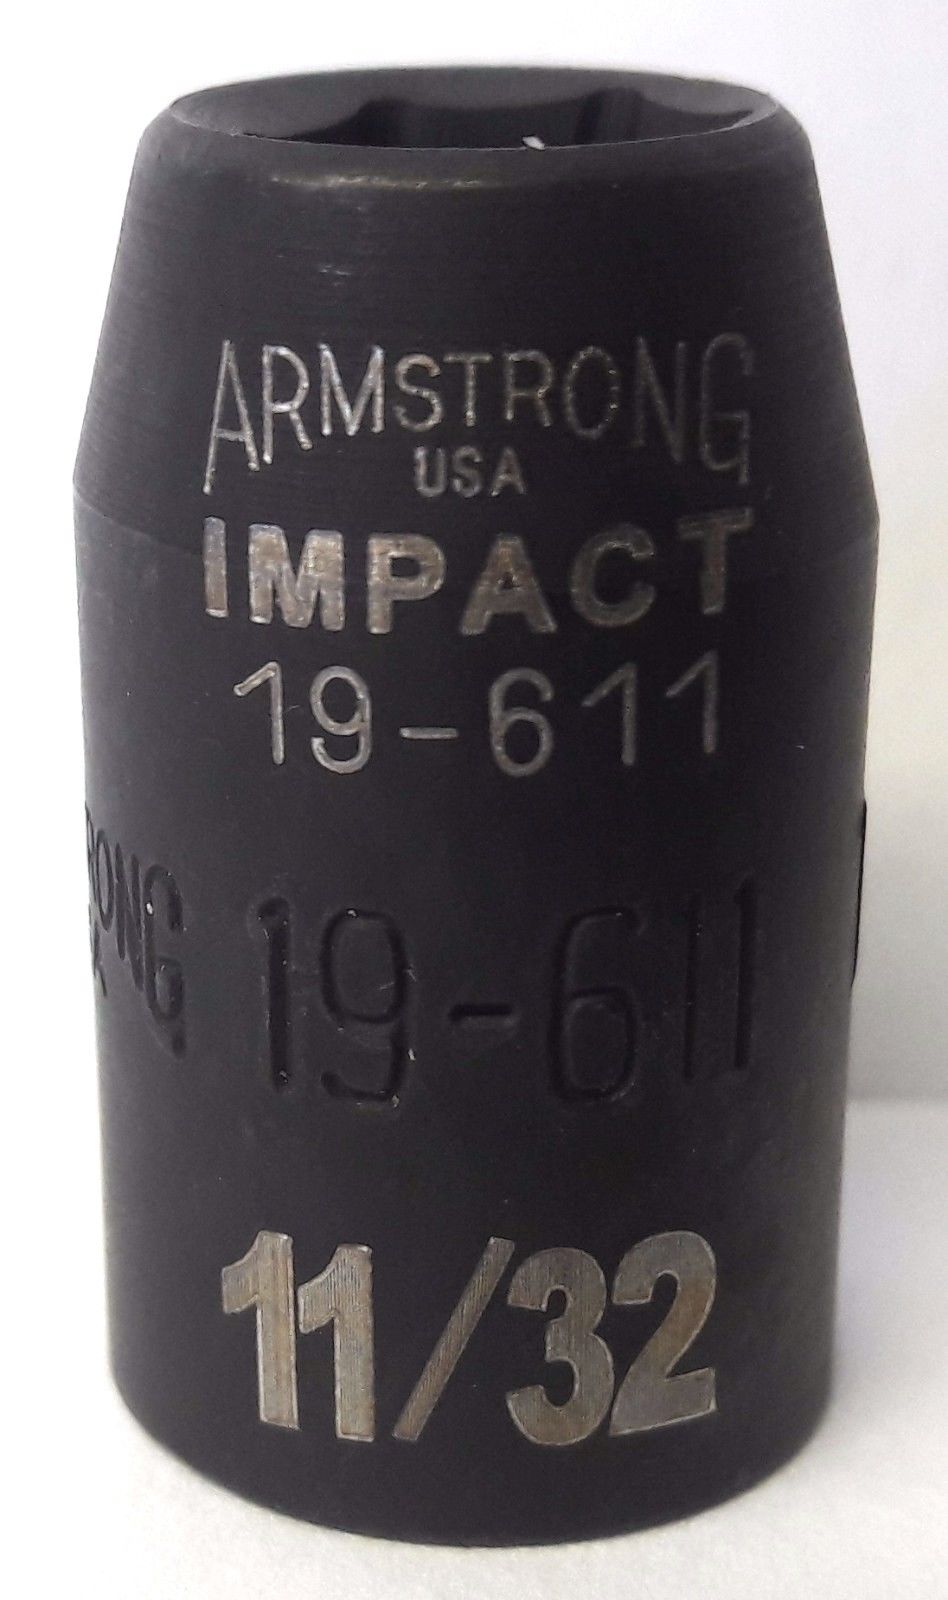 Armstrong 3/8" Drive 11/32" Impact Socket 6pt. USA 19-611